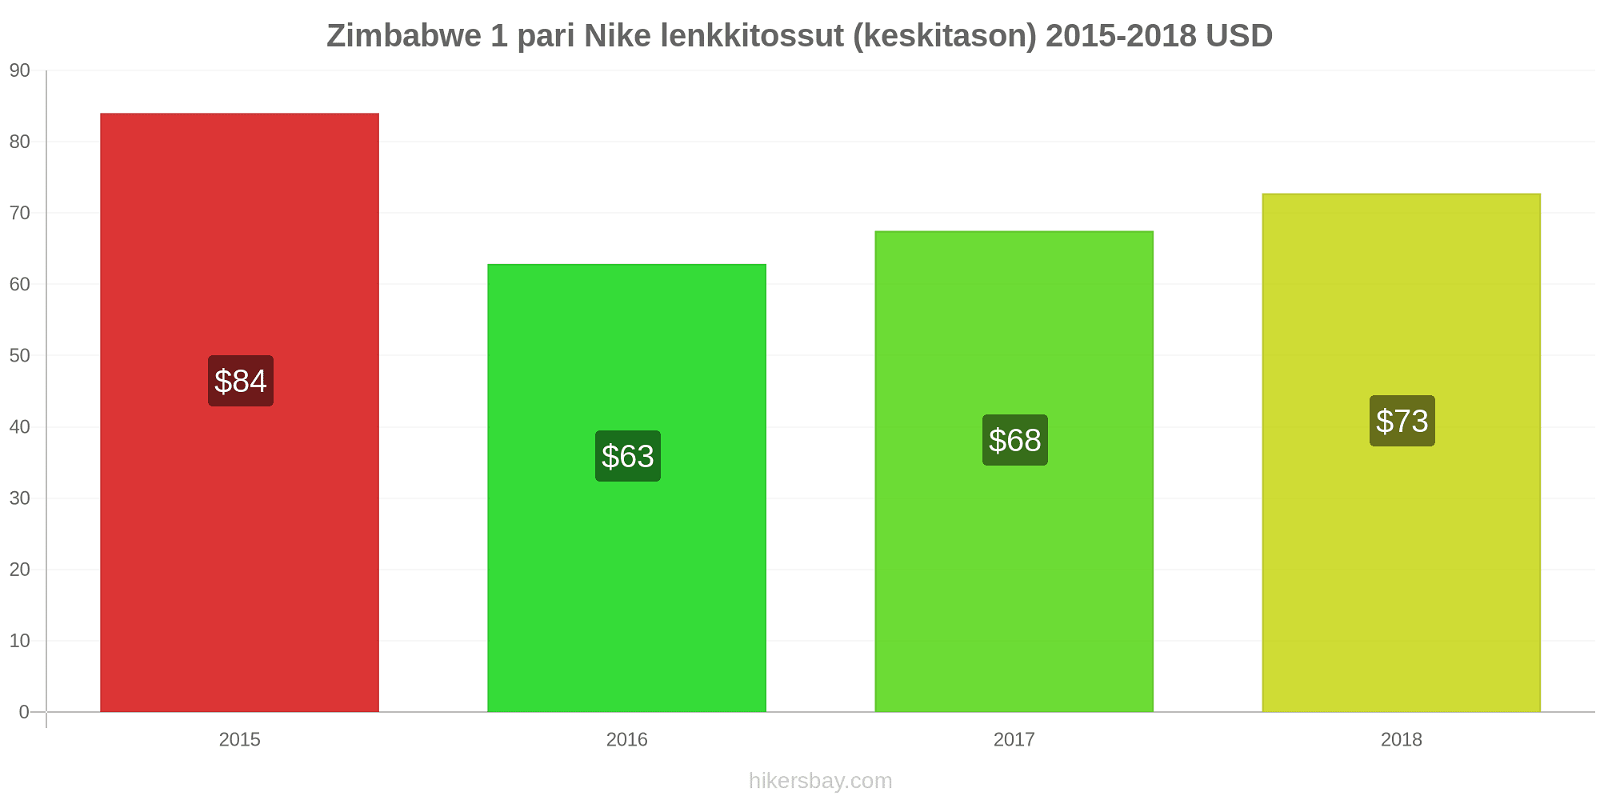 Zimbabwe hintojen muutokset 1 pari Nike lenkkitossut (keskitason) hikersbay.com